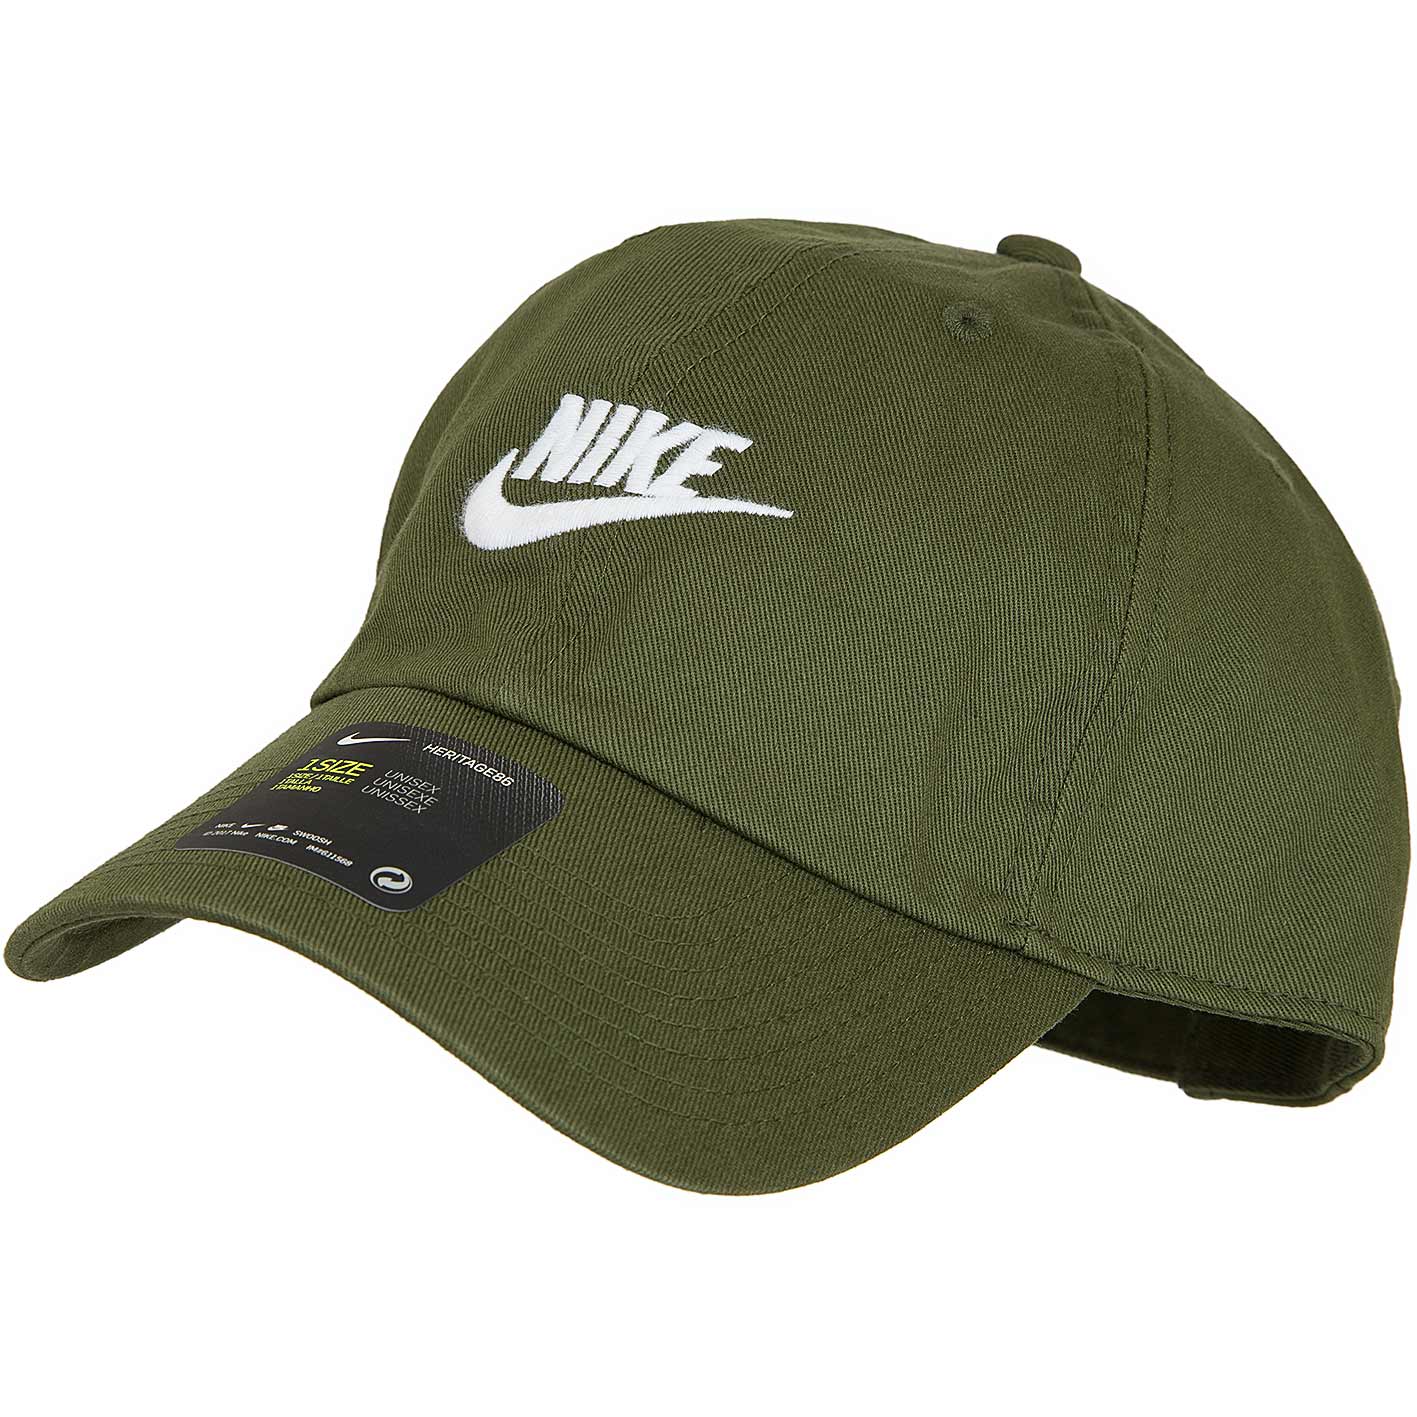 ☆ Nike Snapback Cap H86 Futura Washed oliv/weiß - hier bestellen!